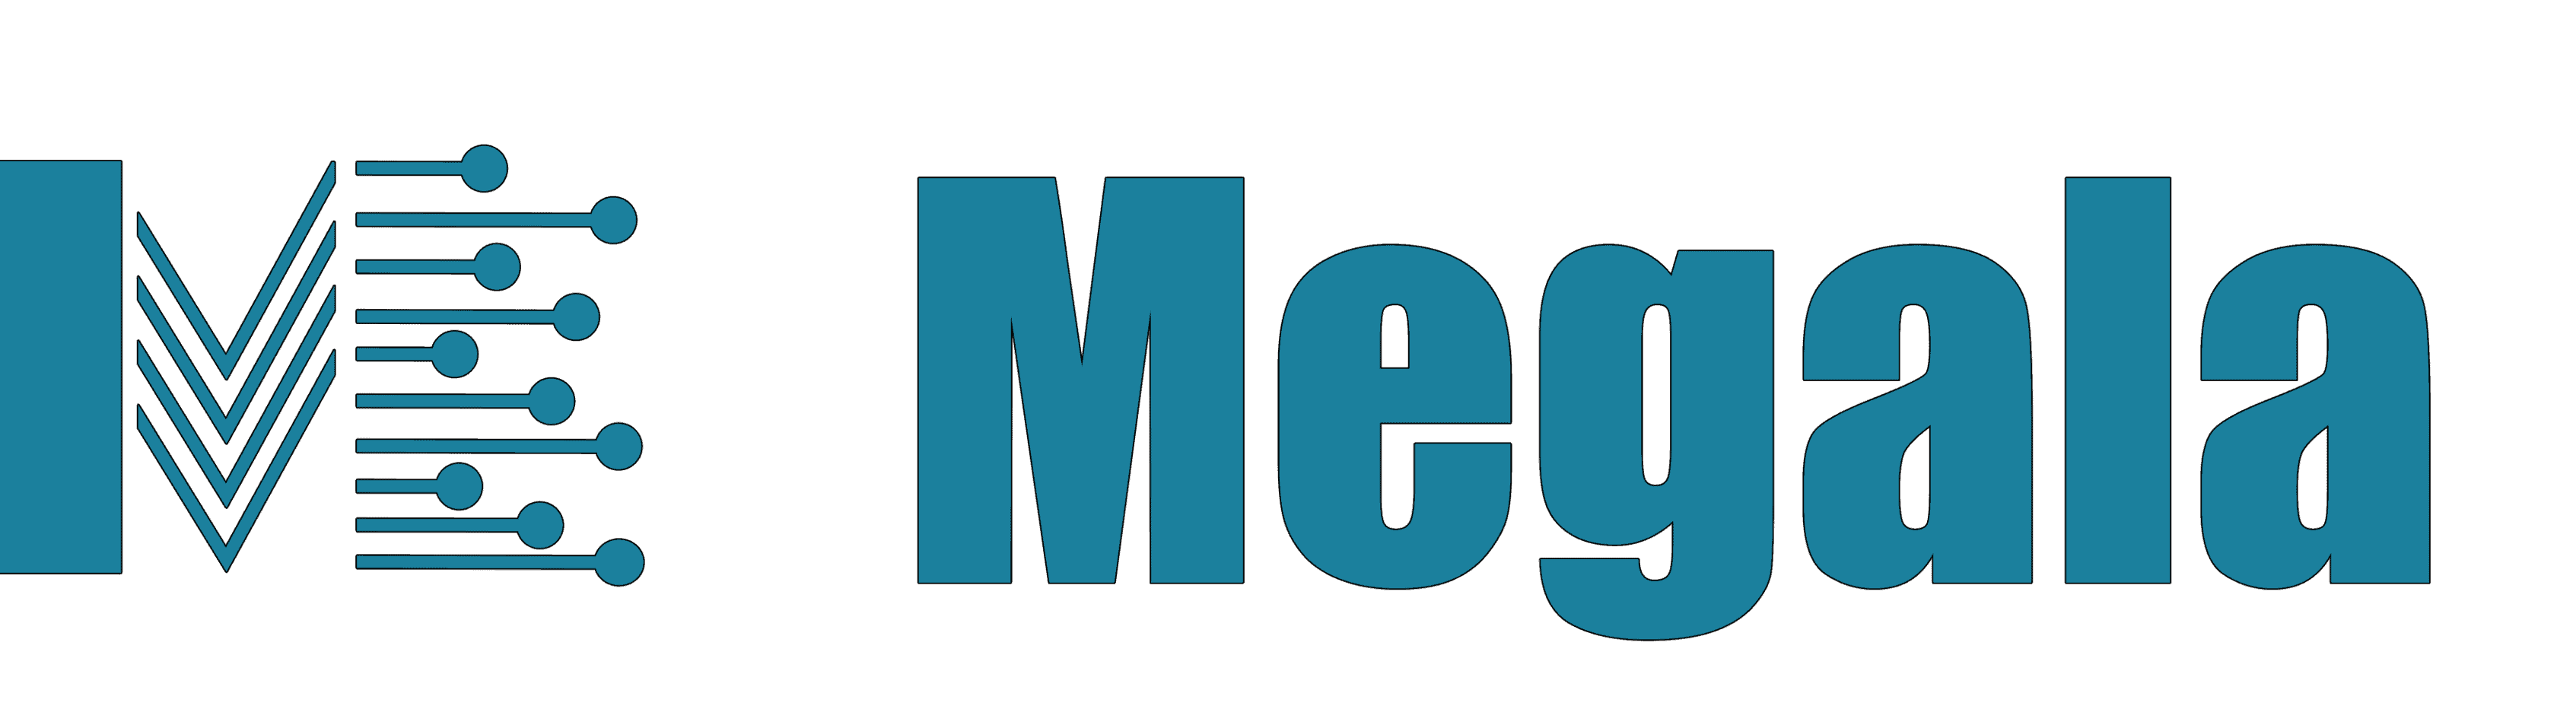 Megala Ventures